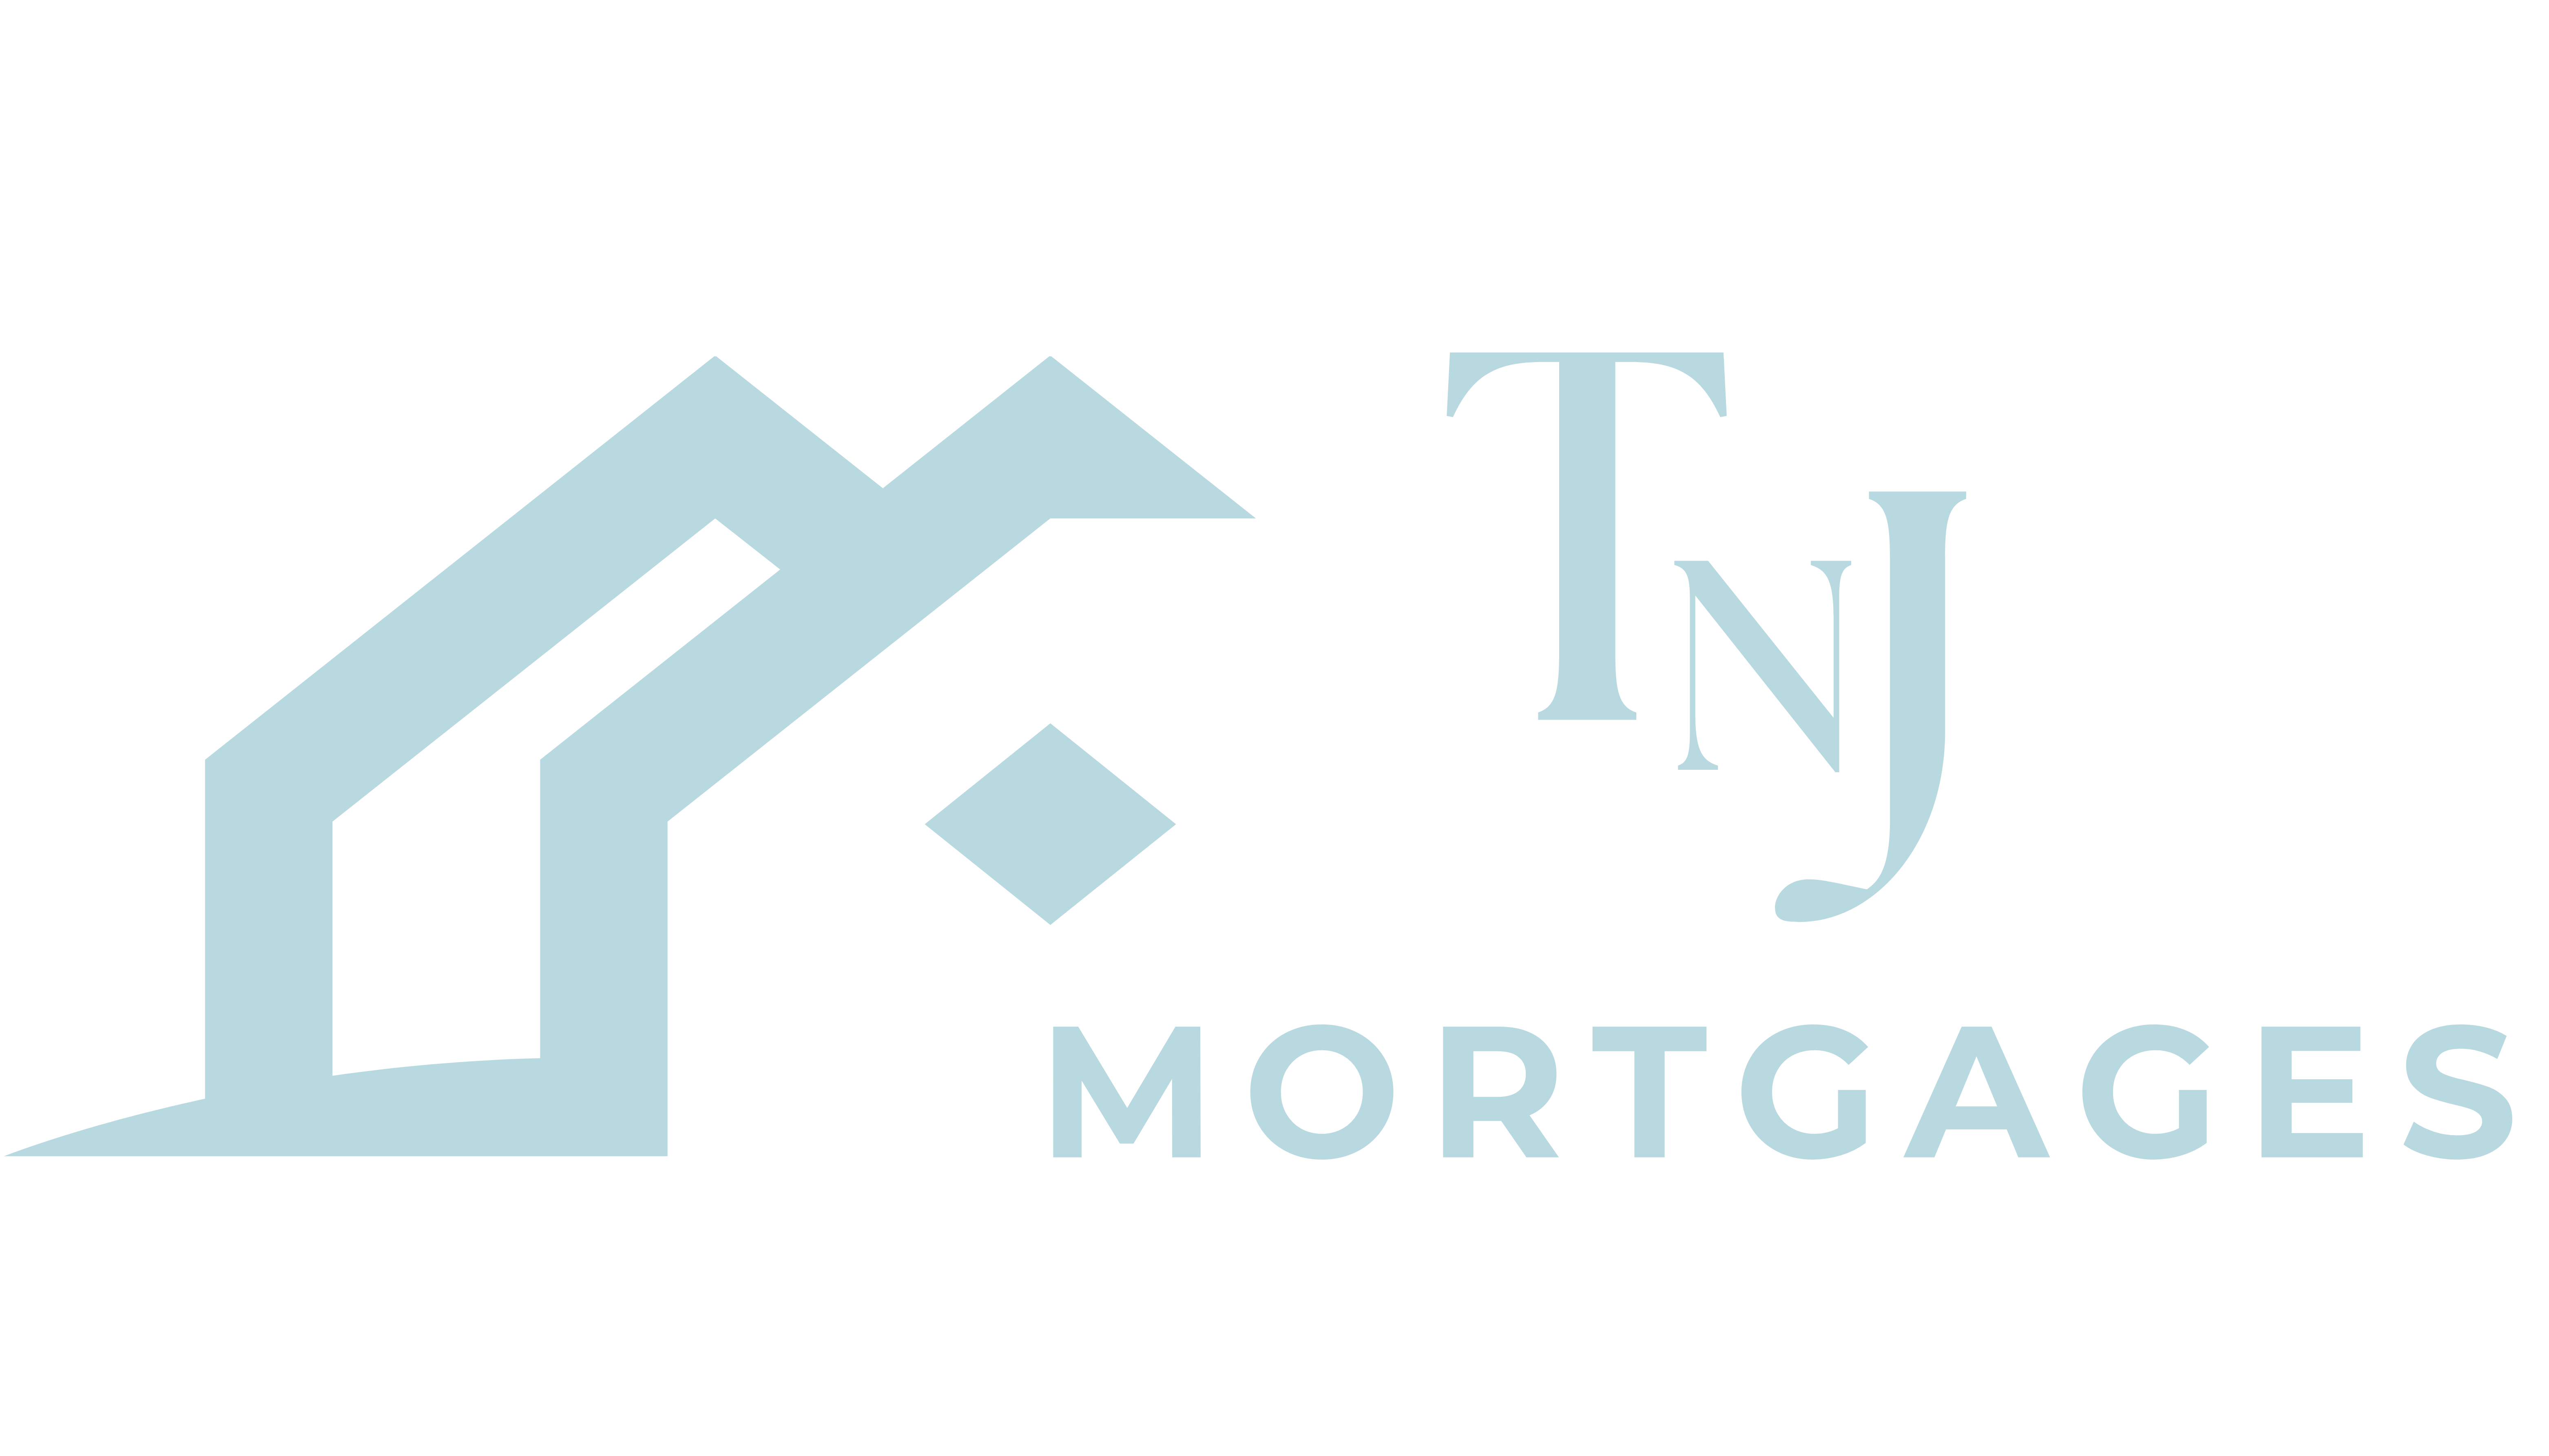 TNJ Mortgages